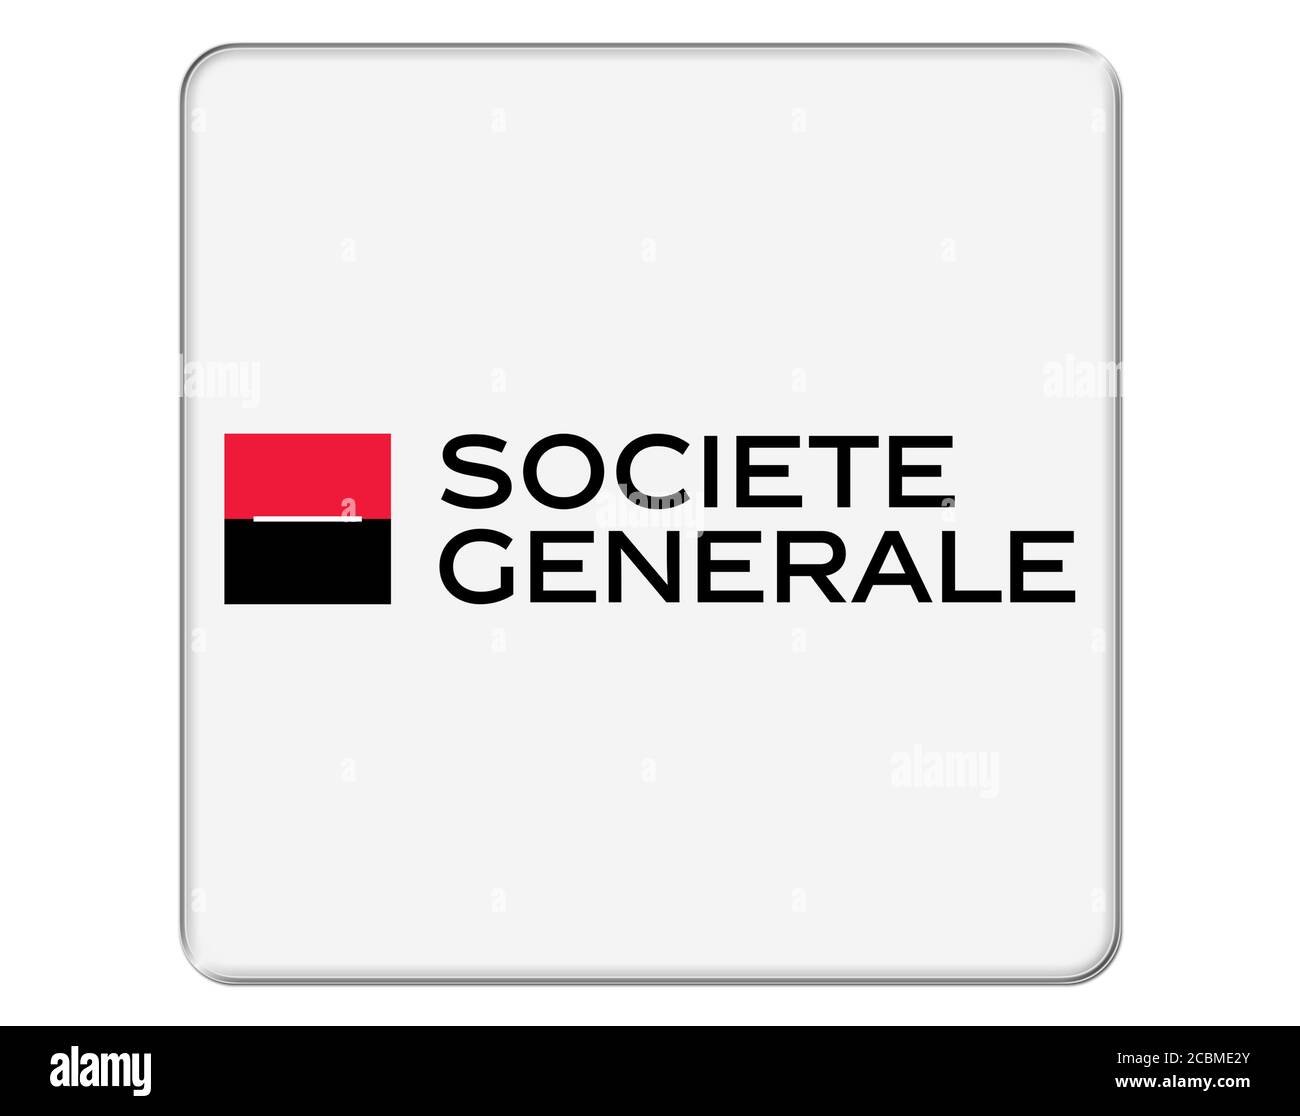 Societe Generale Stock Photo